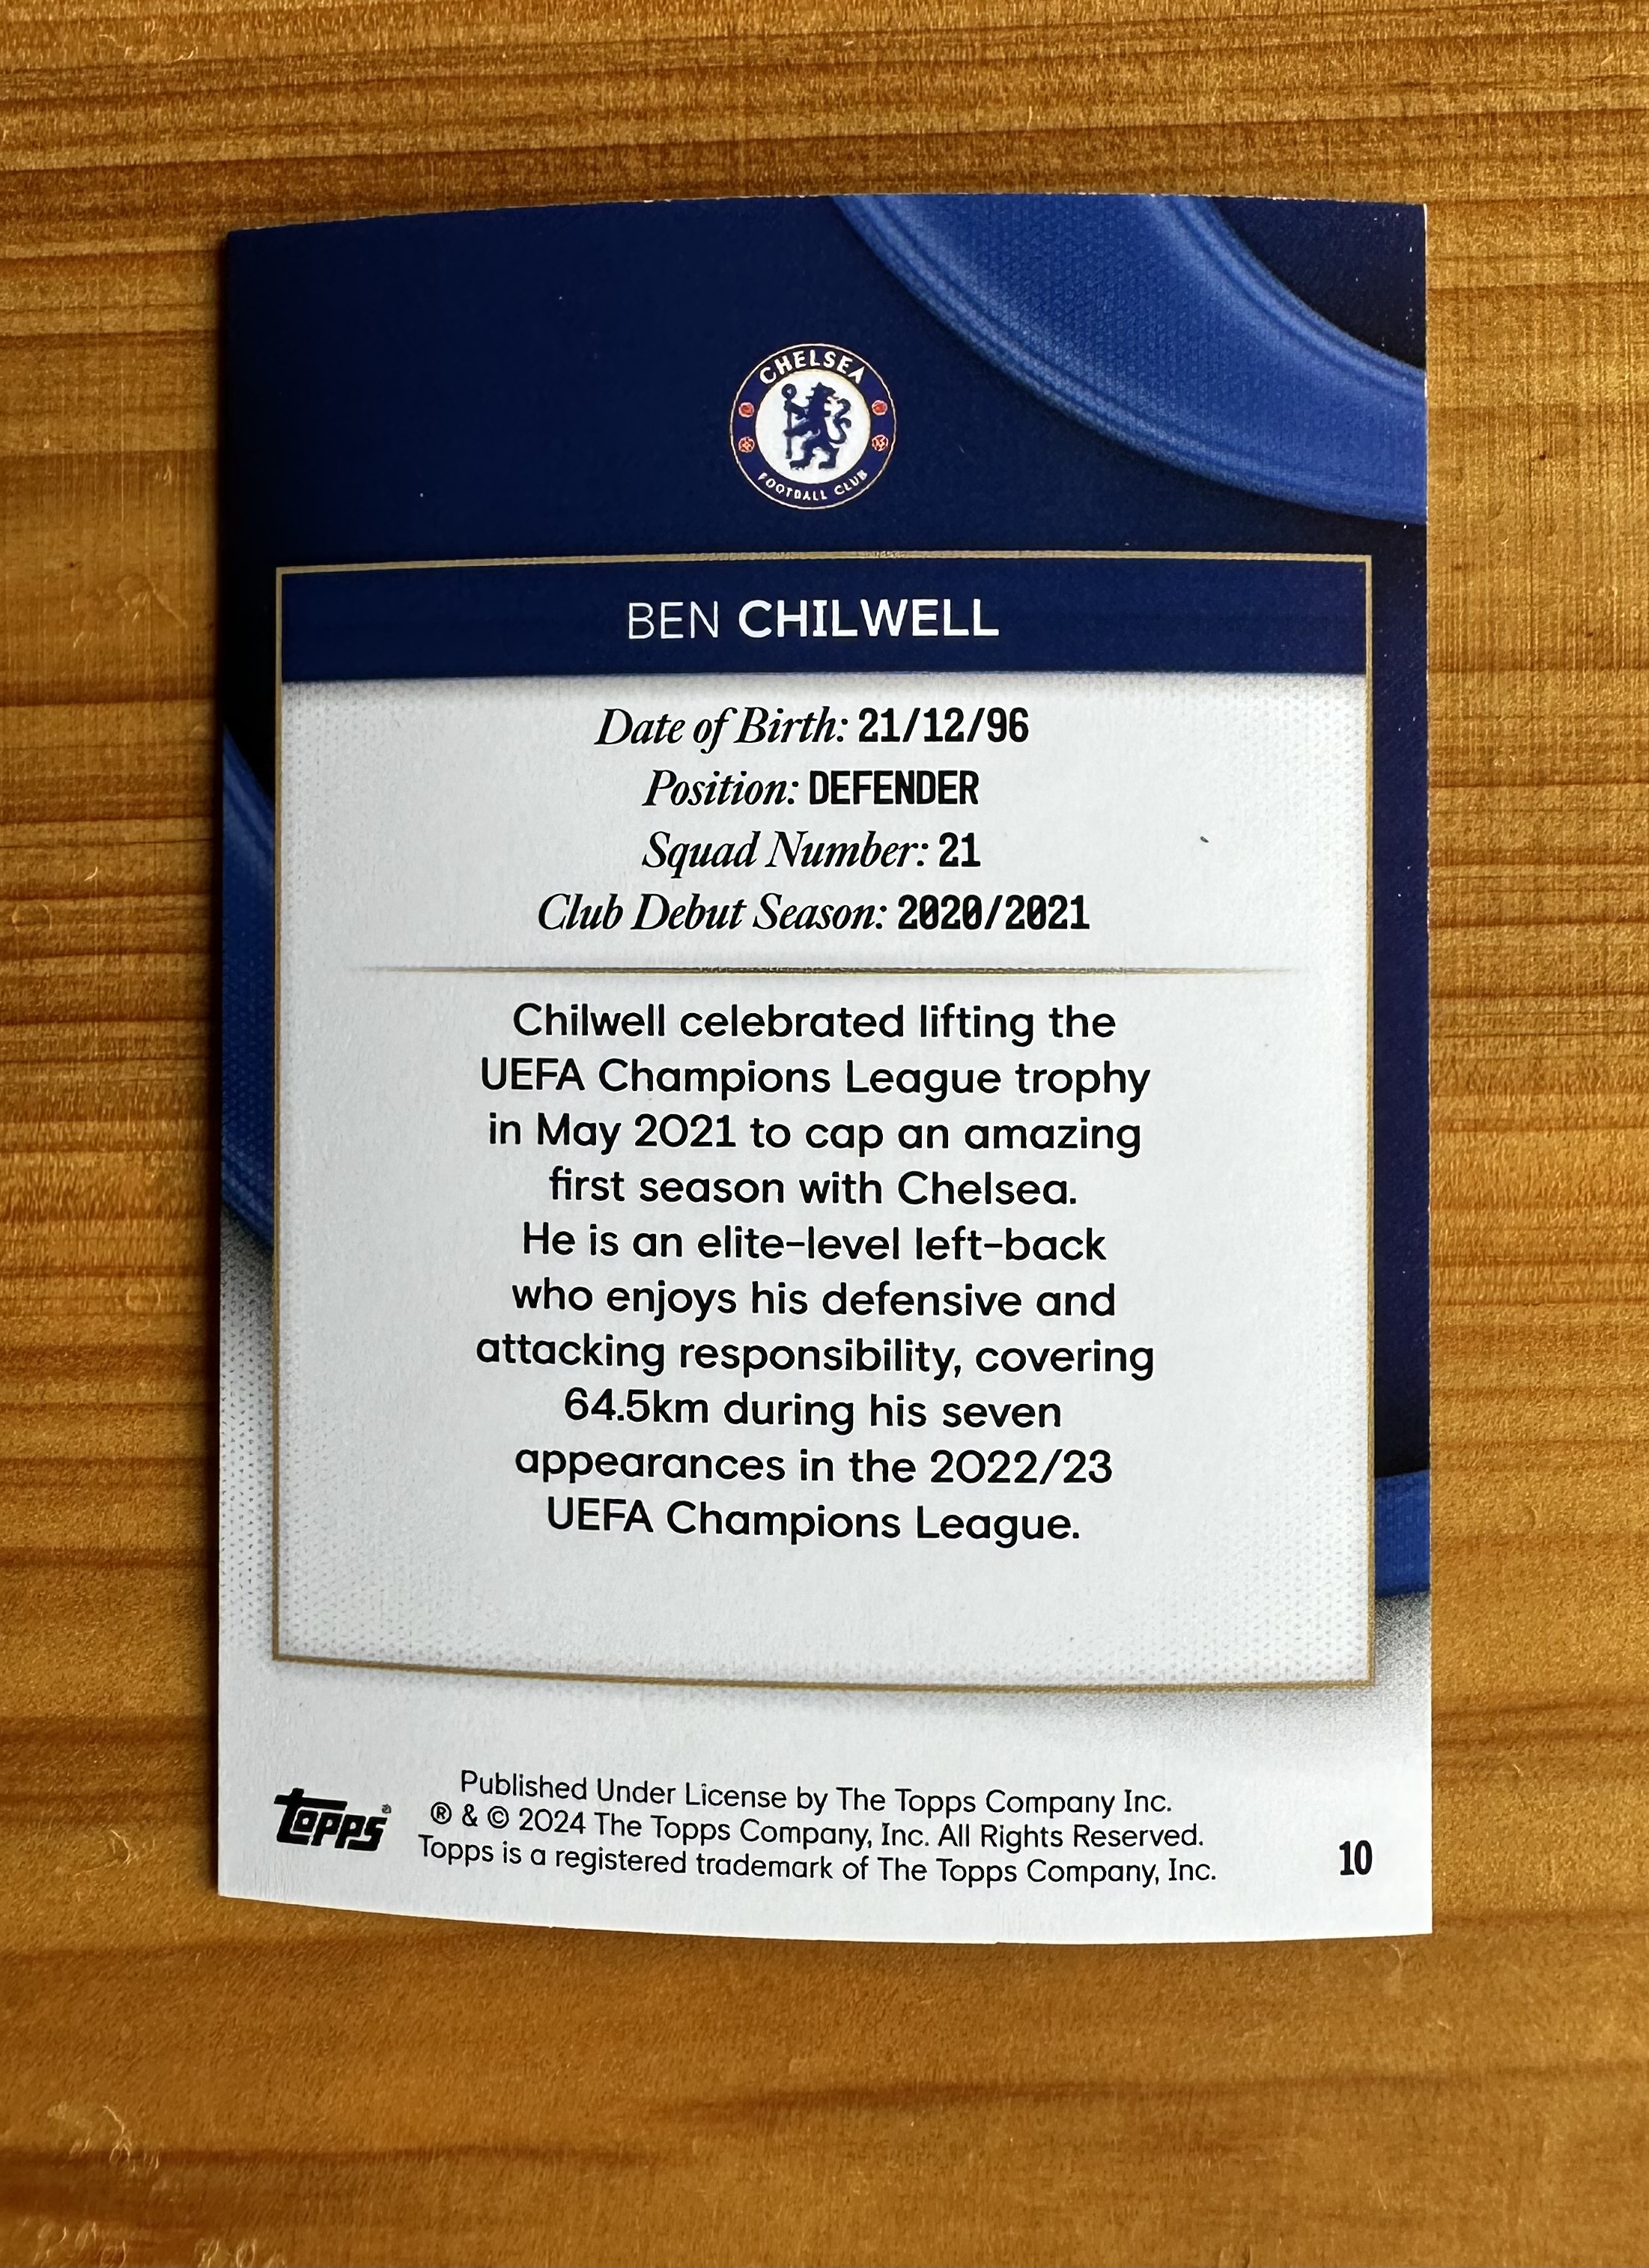 2024 Topps Chelsea FC 切尔西队盒 Ben Chilwell 切尔西 本奇尔维尔 红折 4/5 卡整体弯曲 正面印刷线 左下角翘边 品控慎拍 不累计 菊-ZC